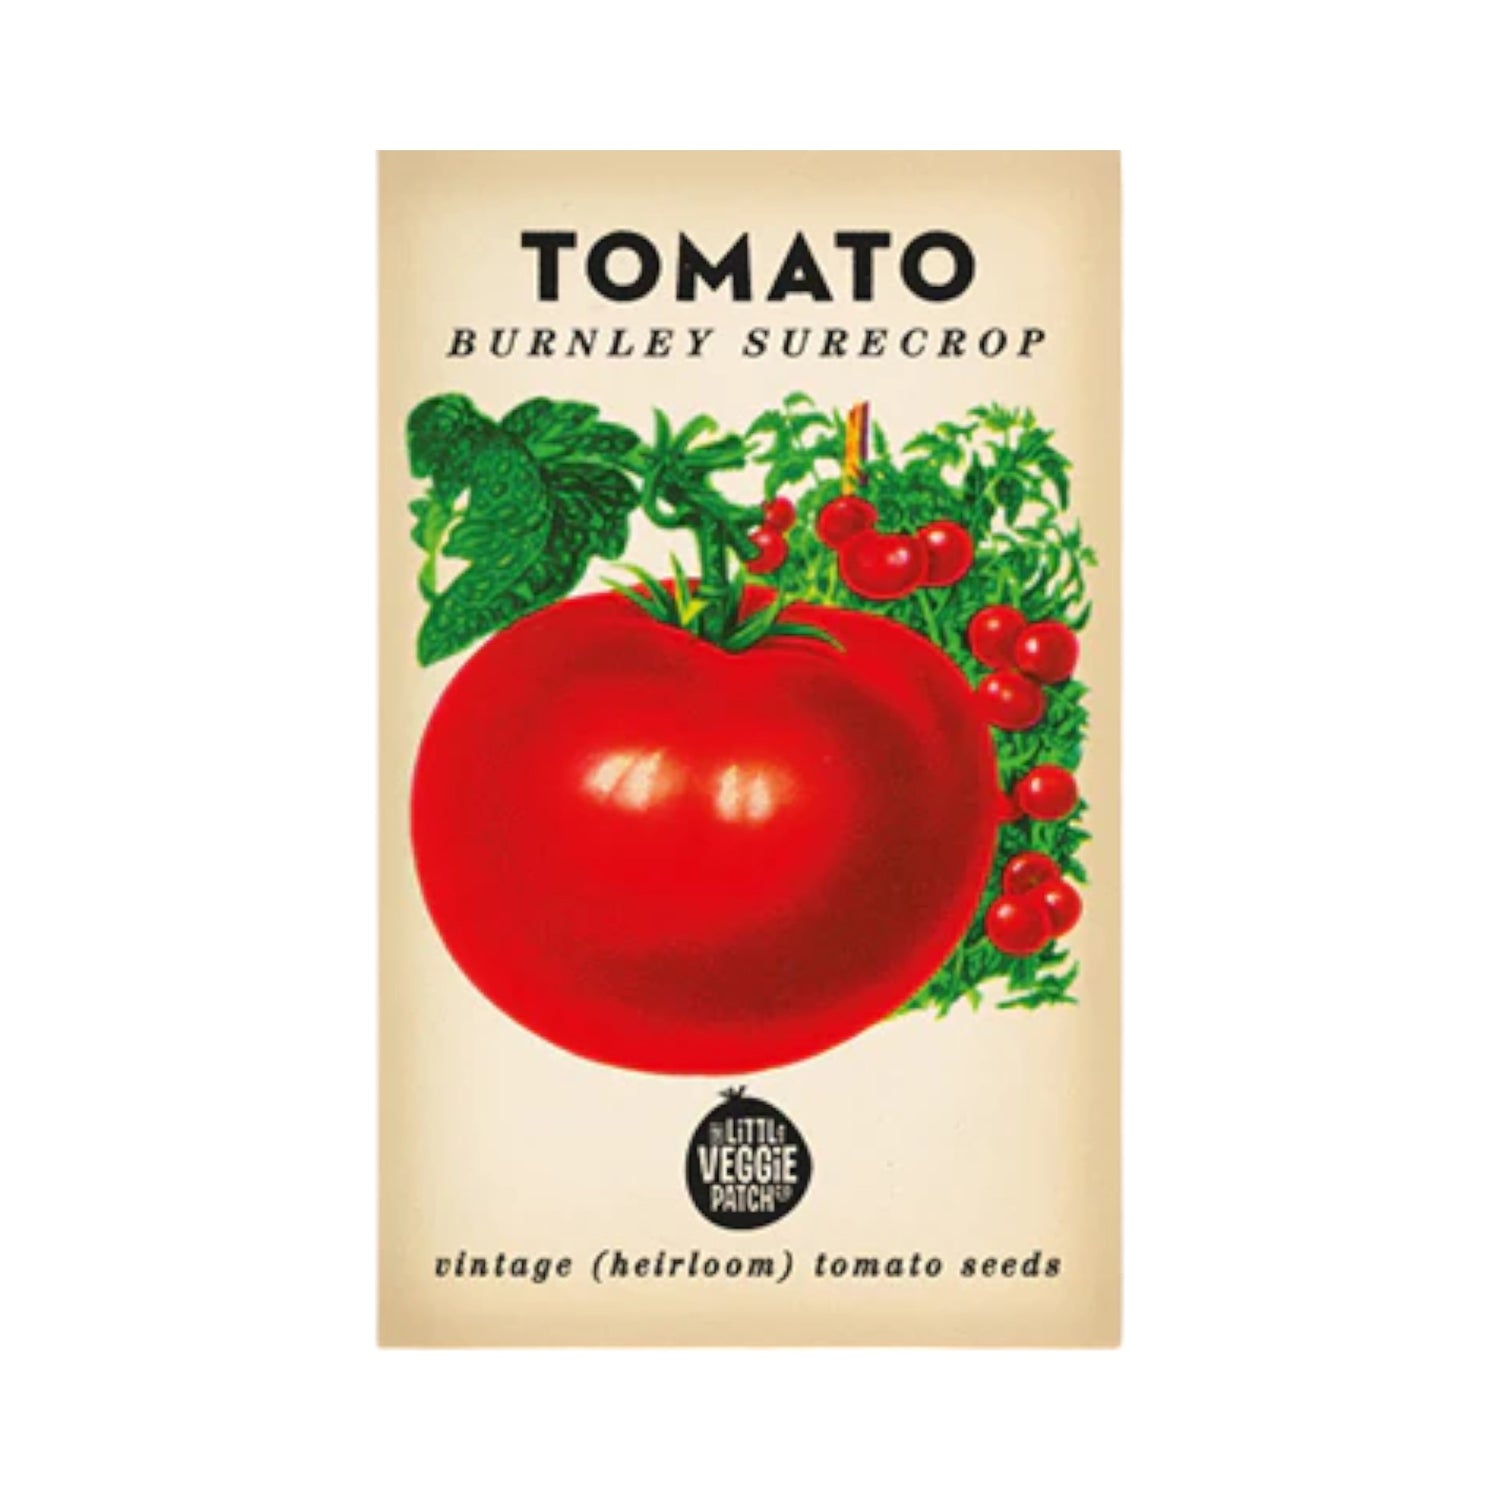 Tomato Burnley